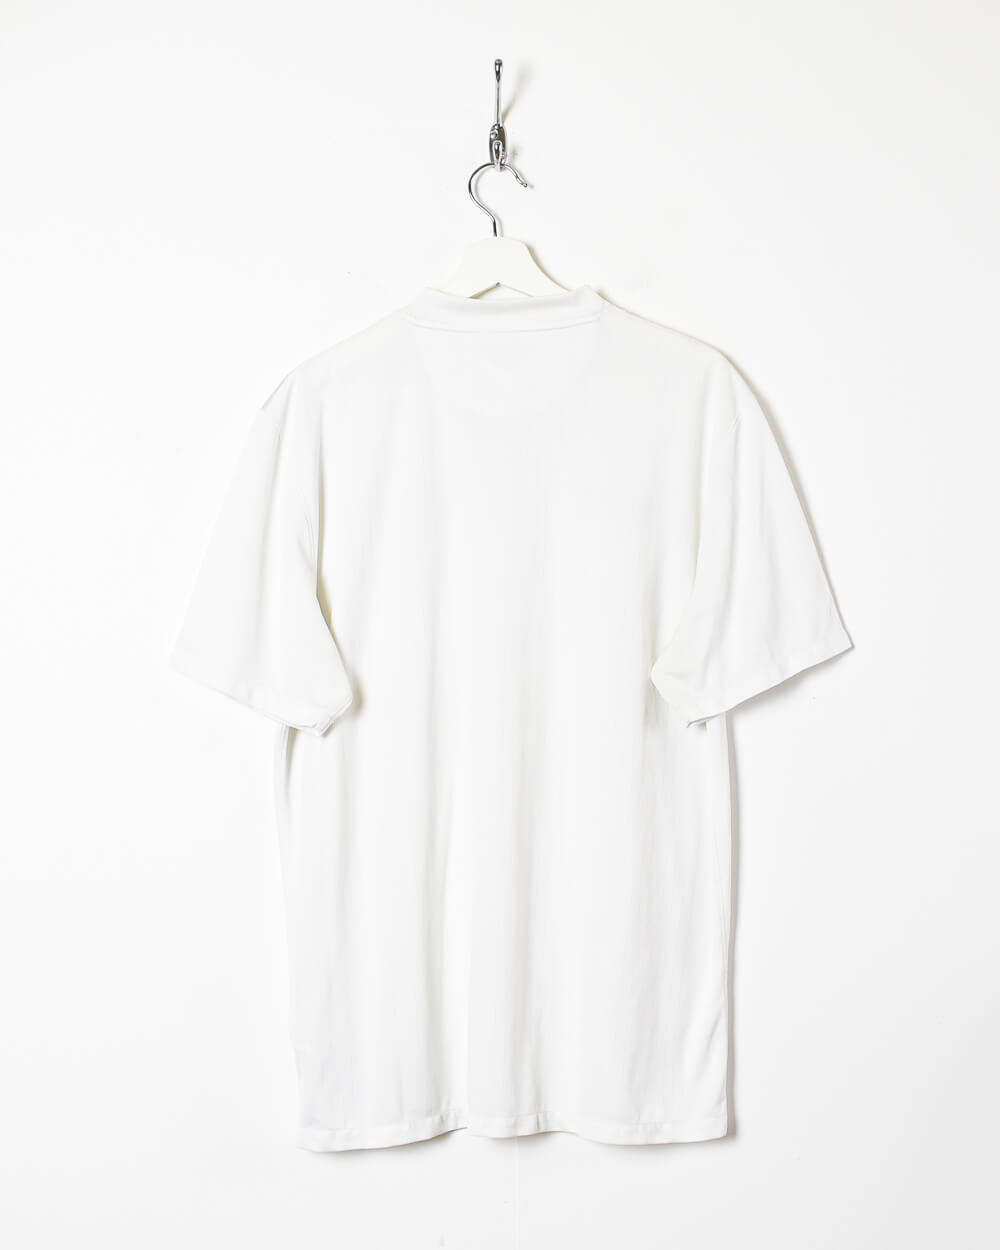 White Nike 2014 England Home Shirt - X-Large